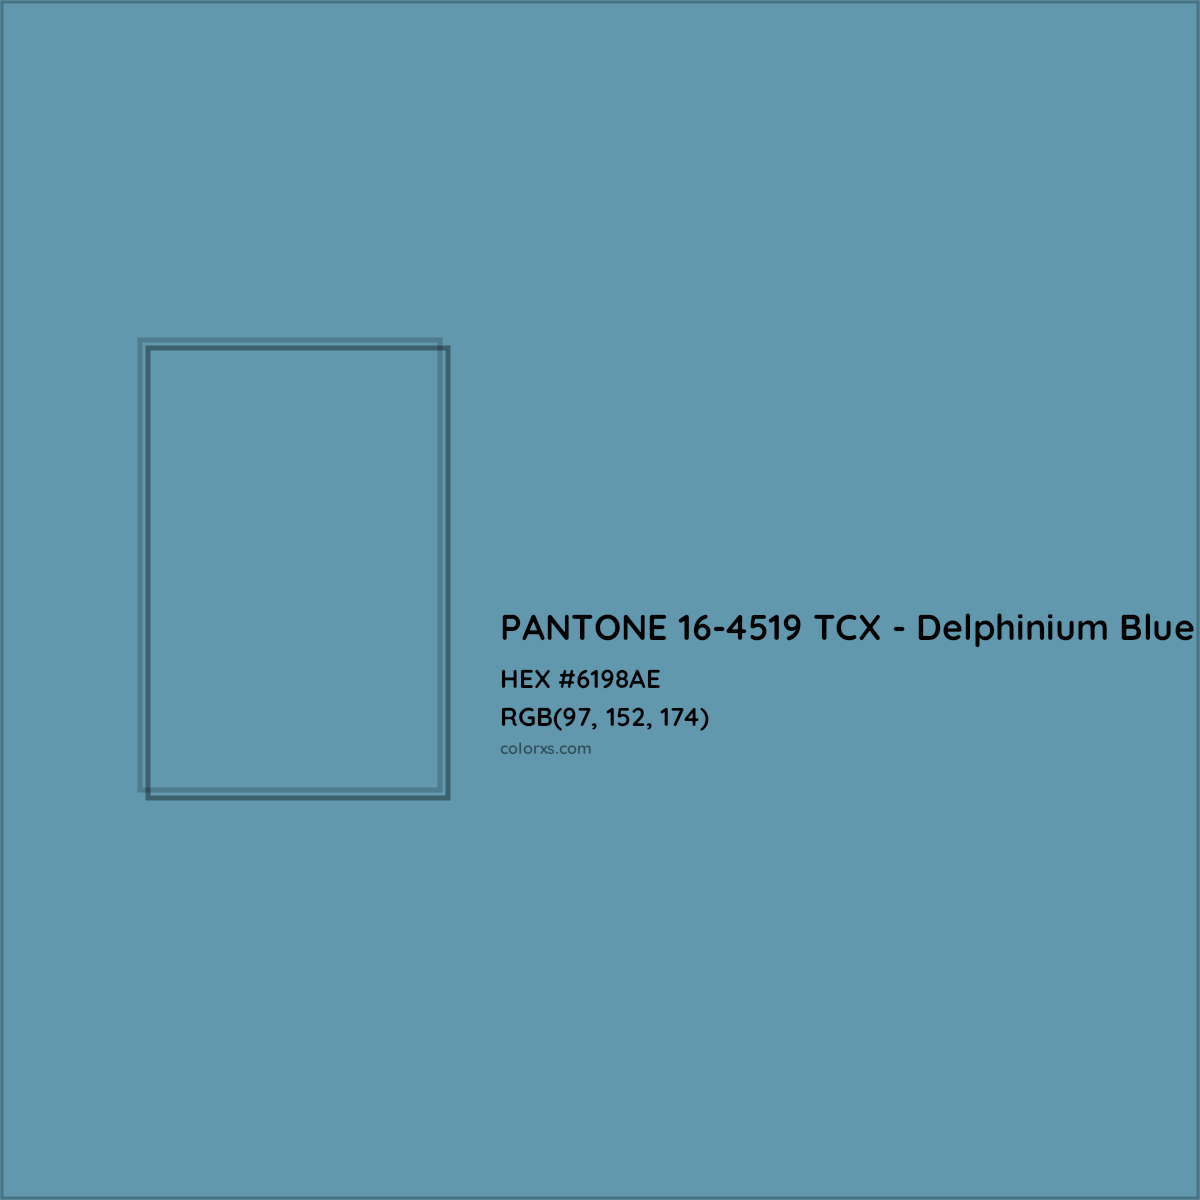 HEX #6198AE PANTONE 16-4519 TCX - Delphinium Blue CMS Pantone TCX - Color Code